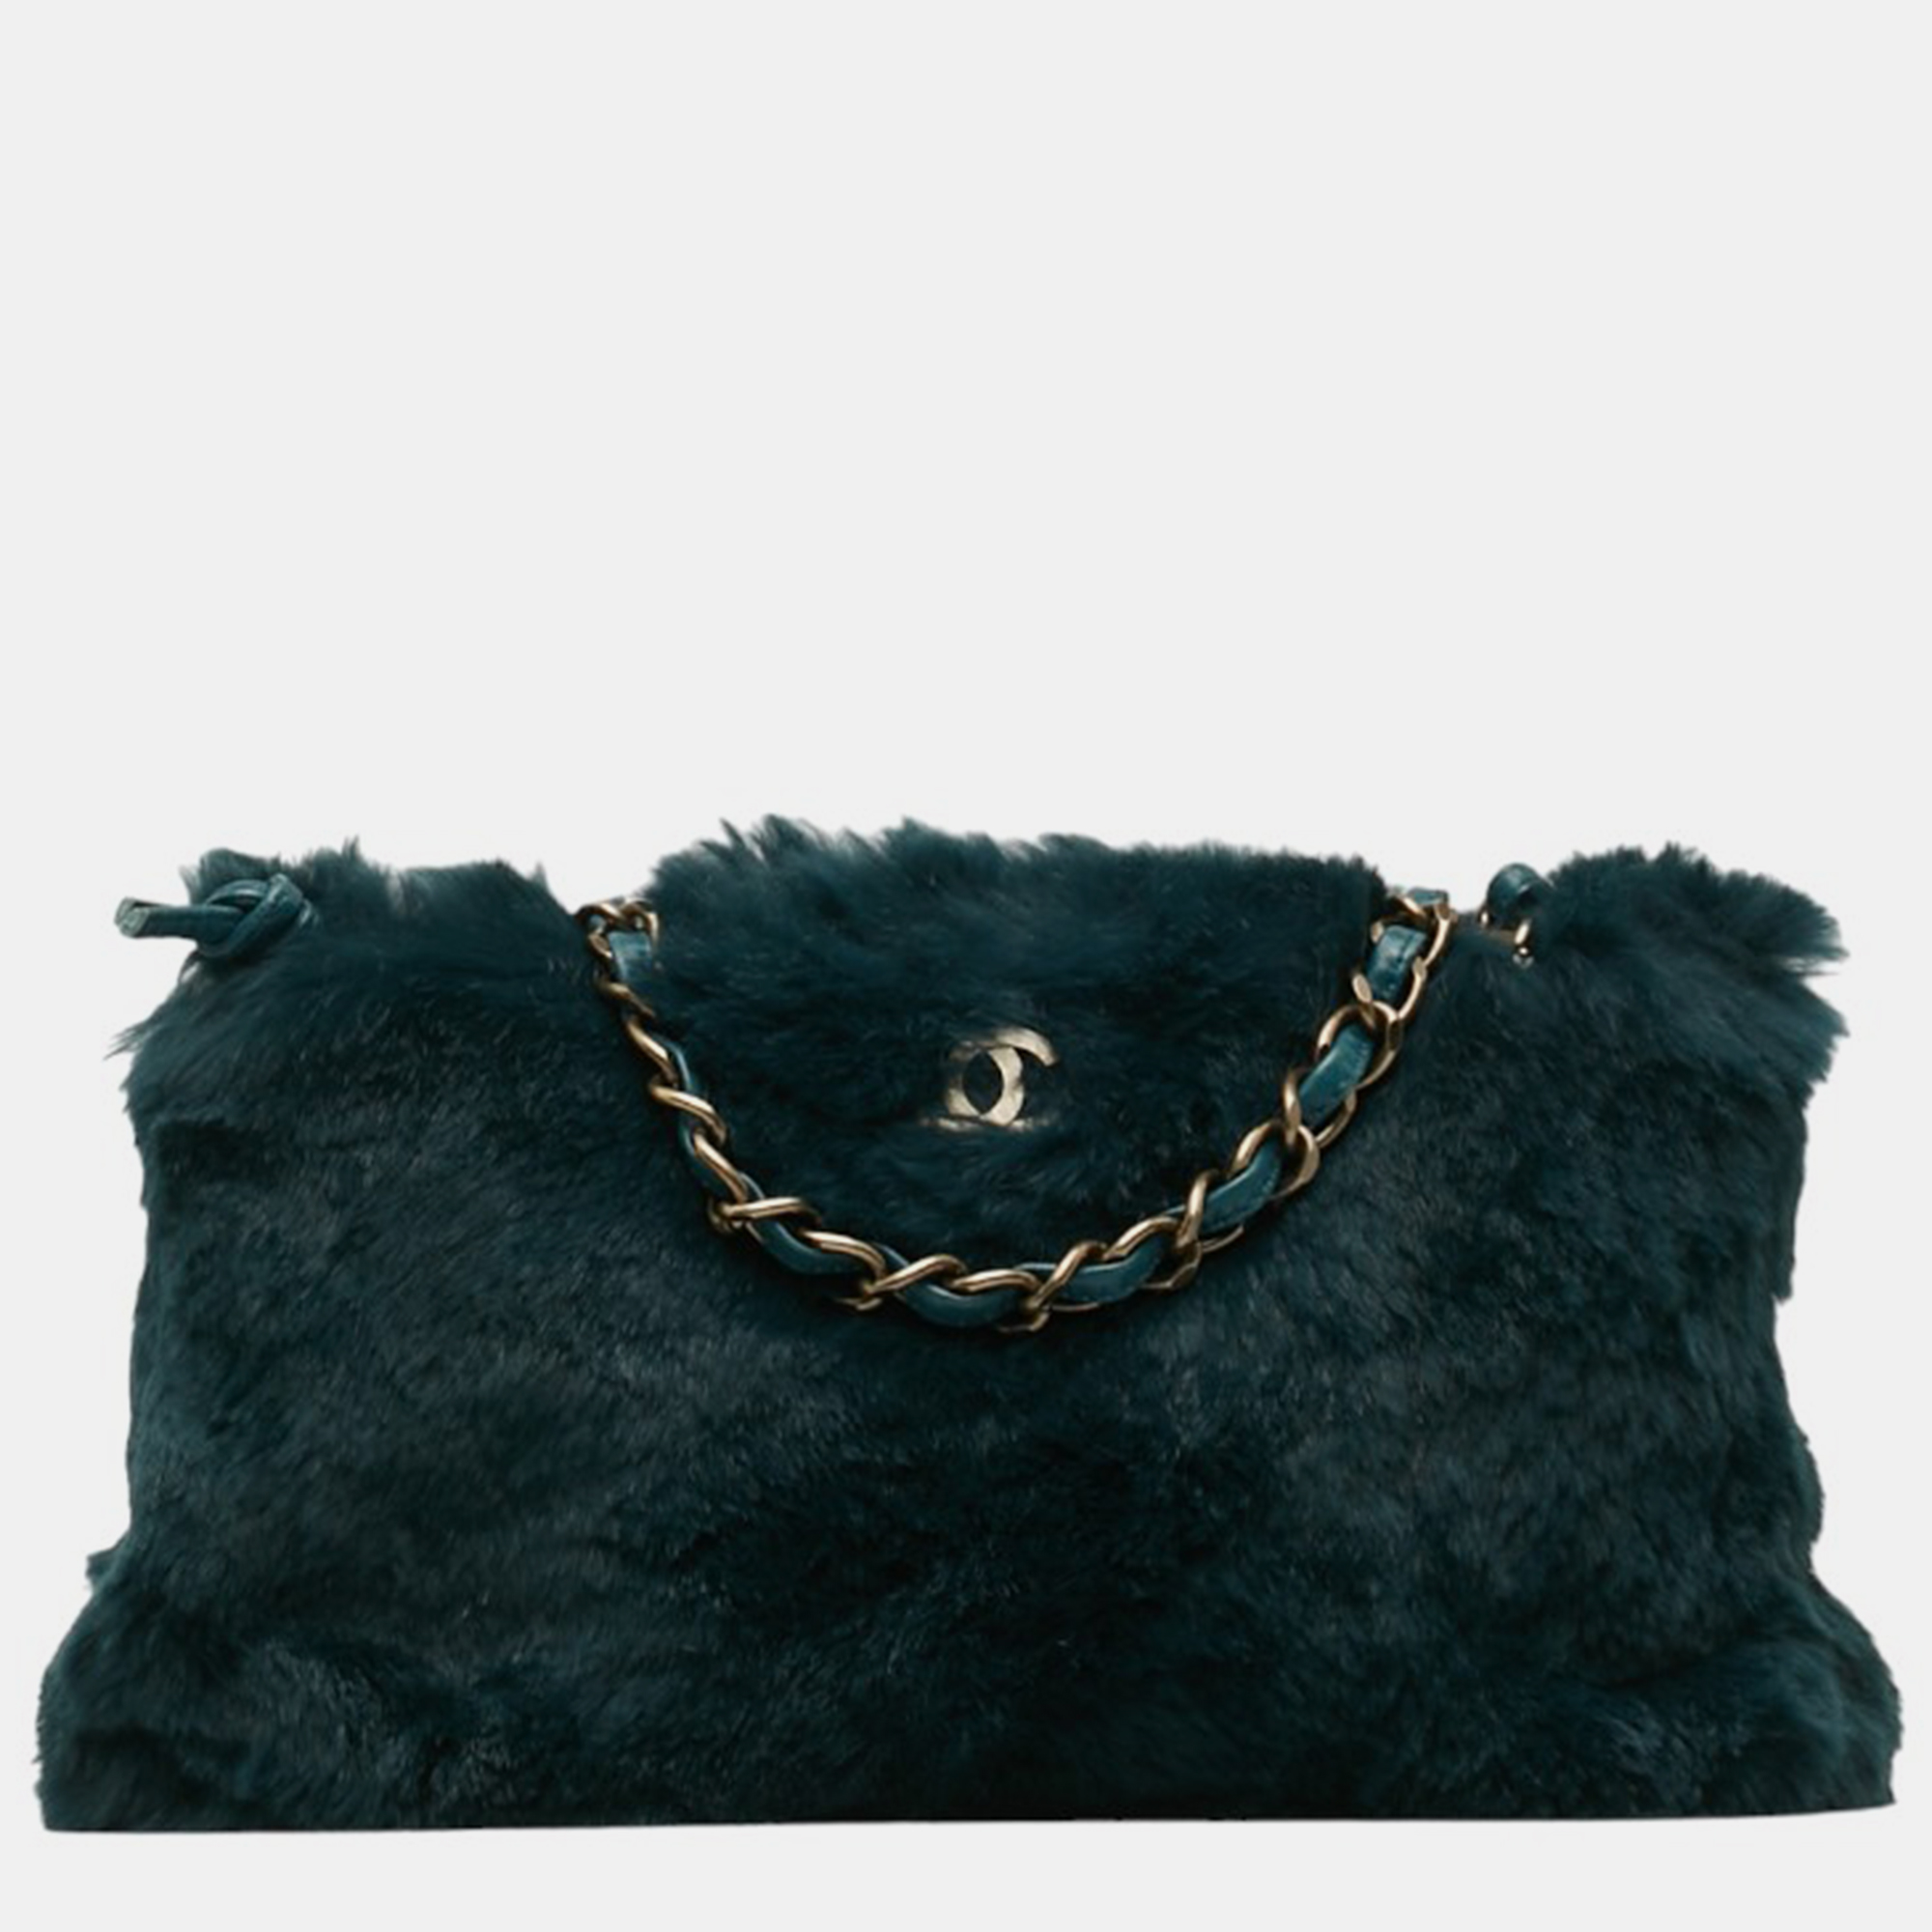 Chanel green leather cc fur chain shoulder bag